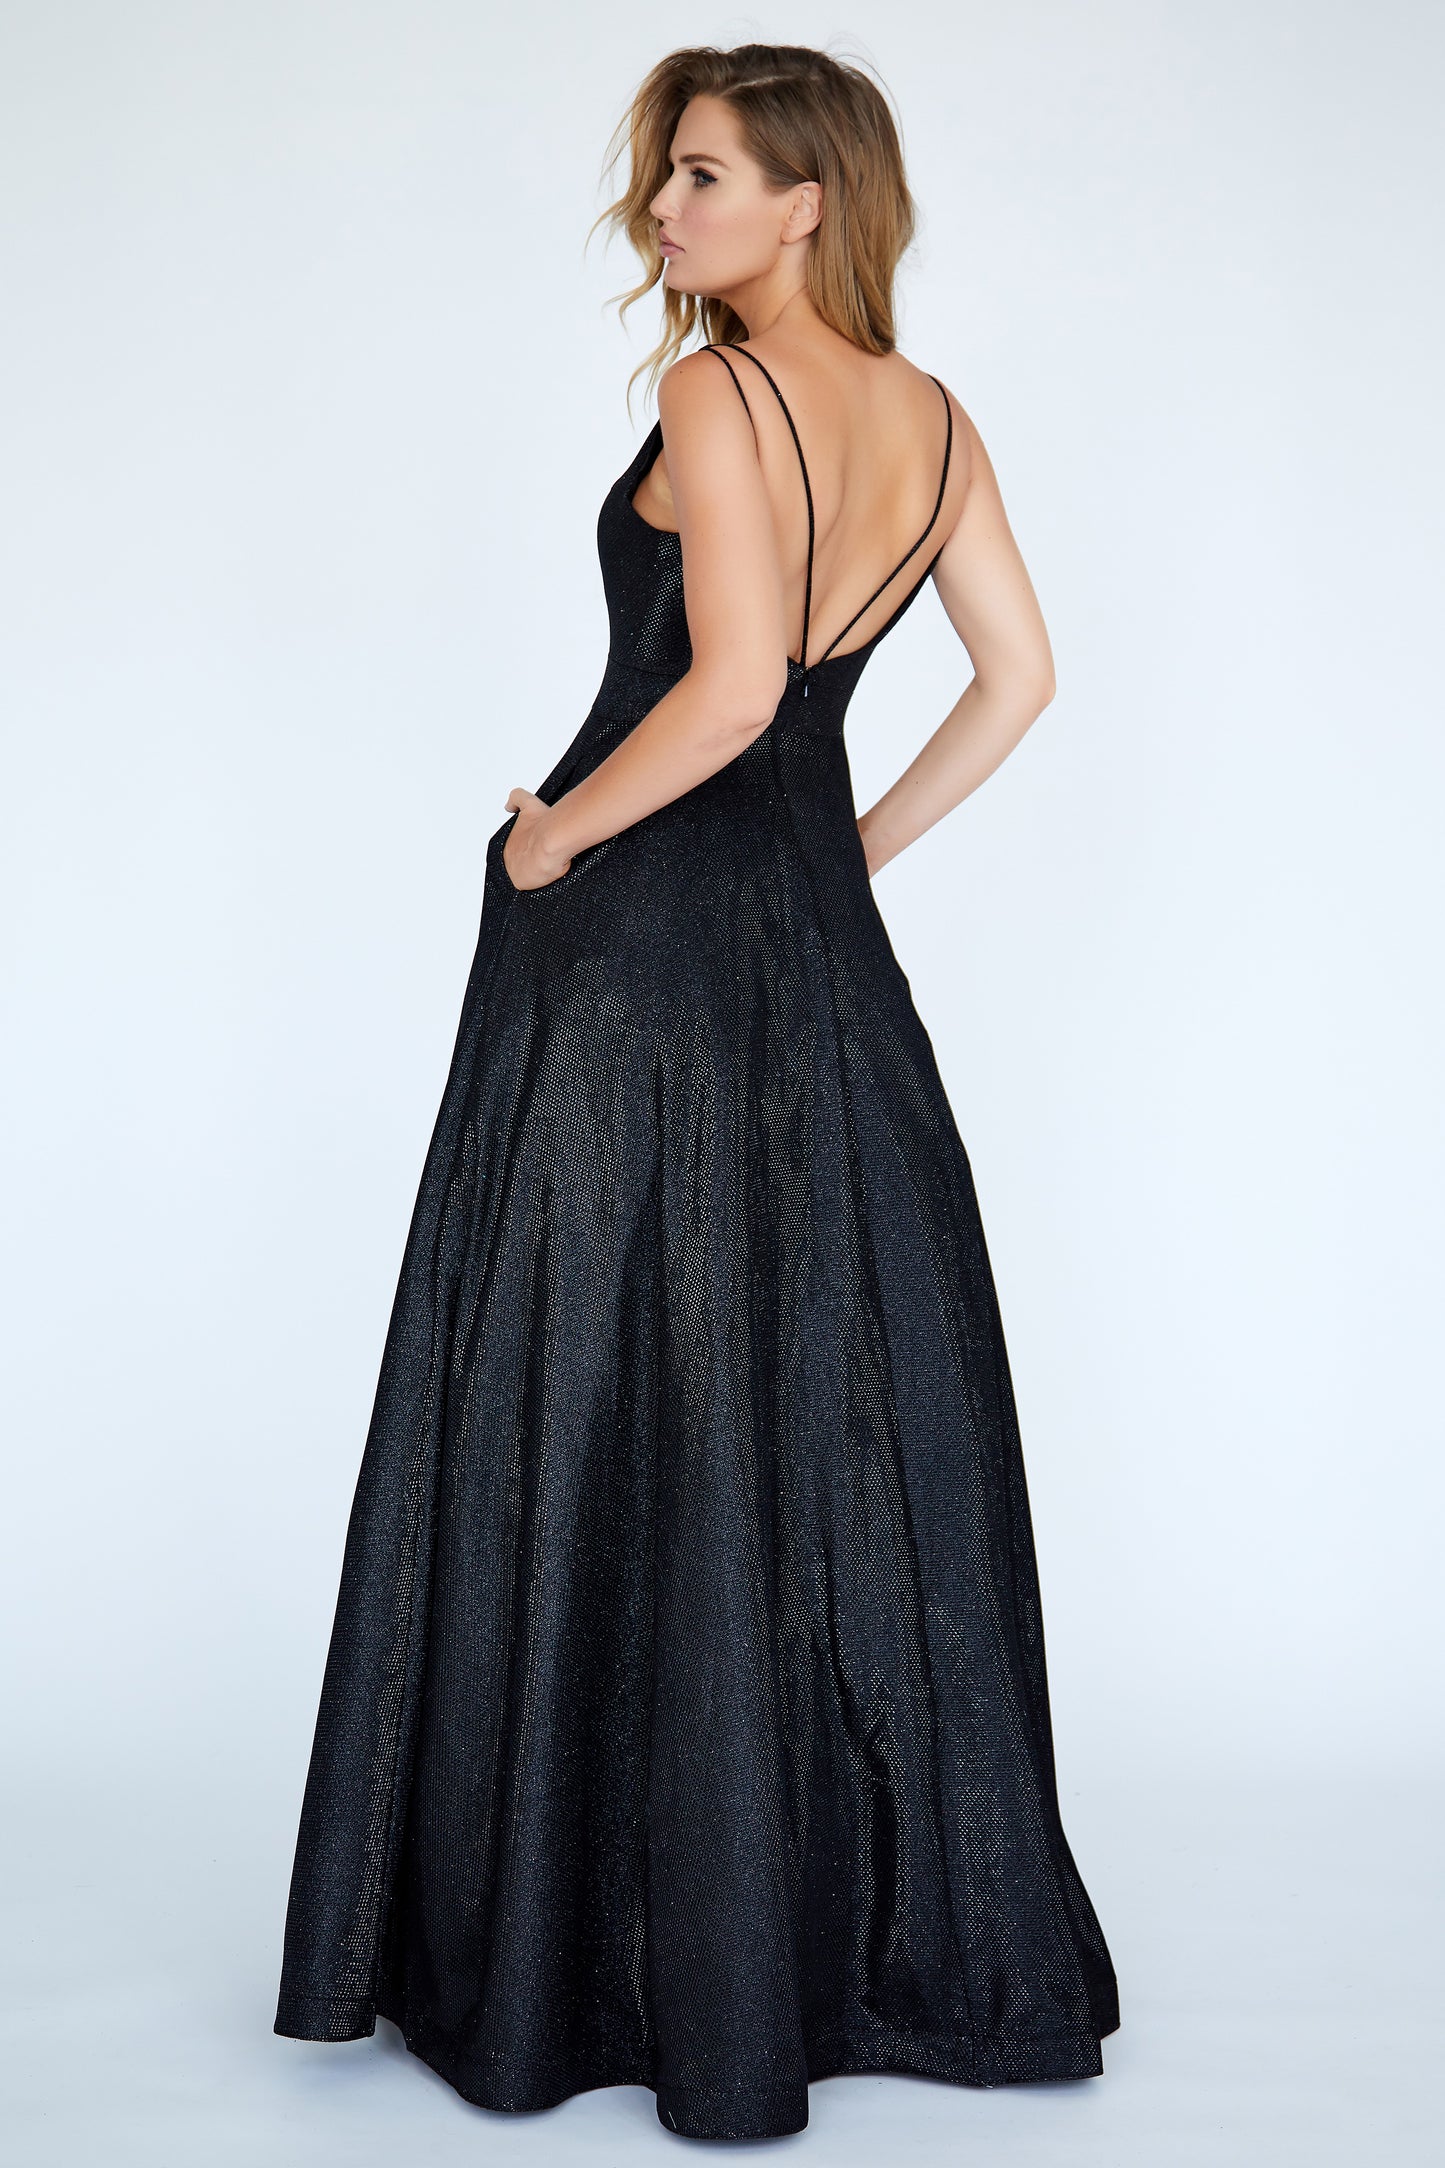 Jolene 20084 Size 2 Long Black Metallic Shimmer A Line Prom Dress Formal Gown